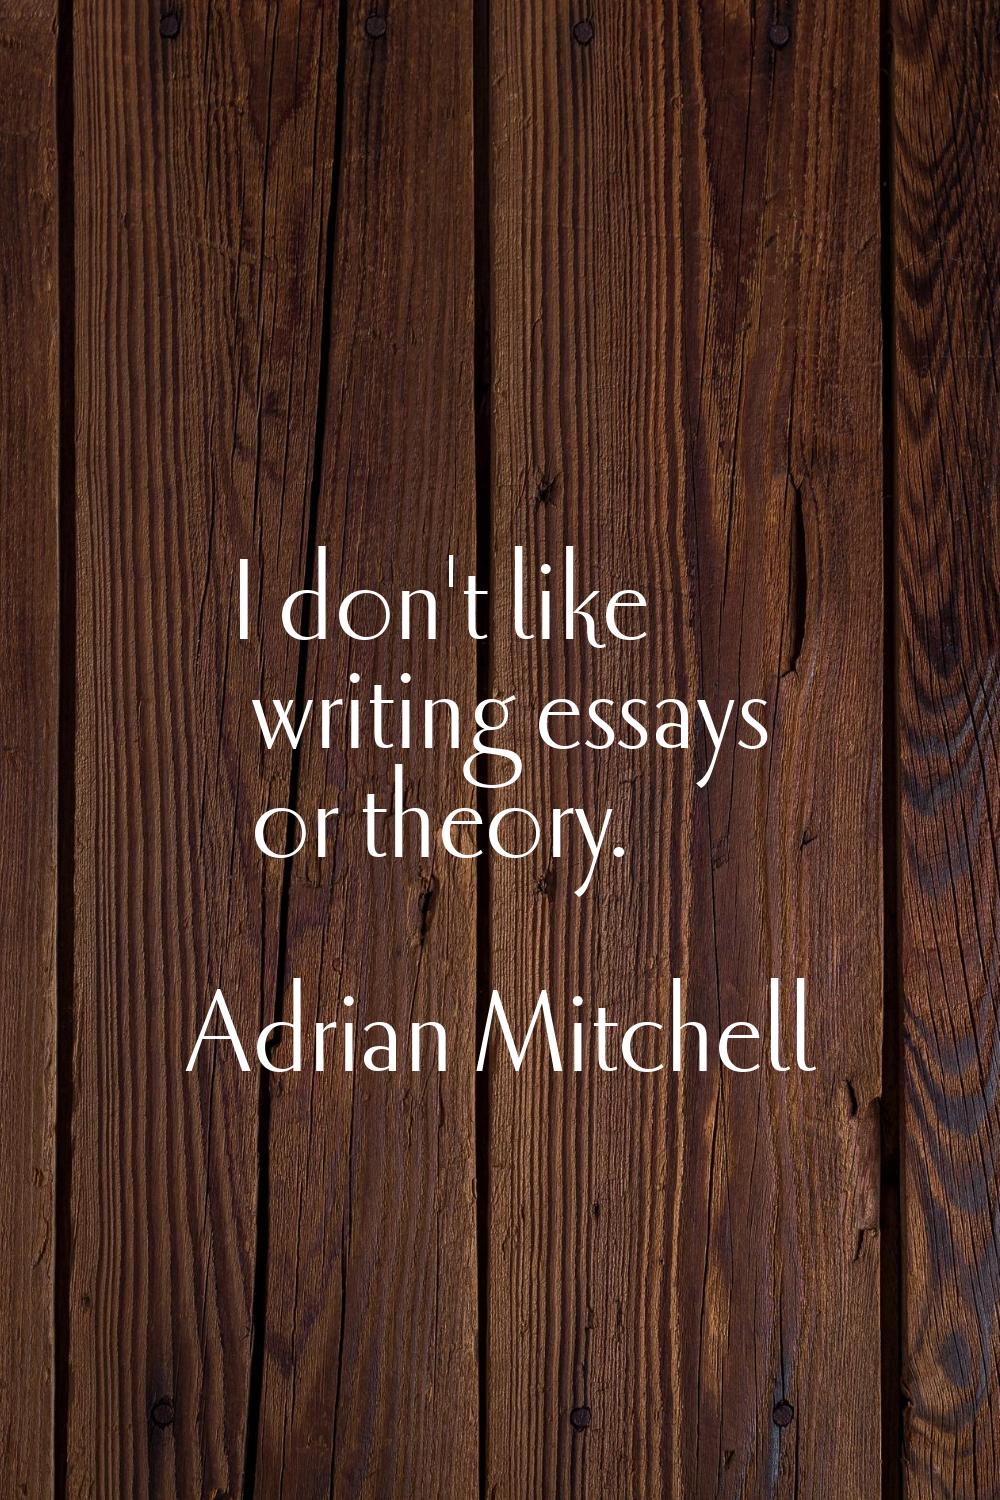 I don't like writing essays or theory.